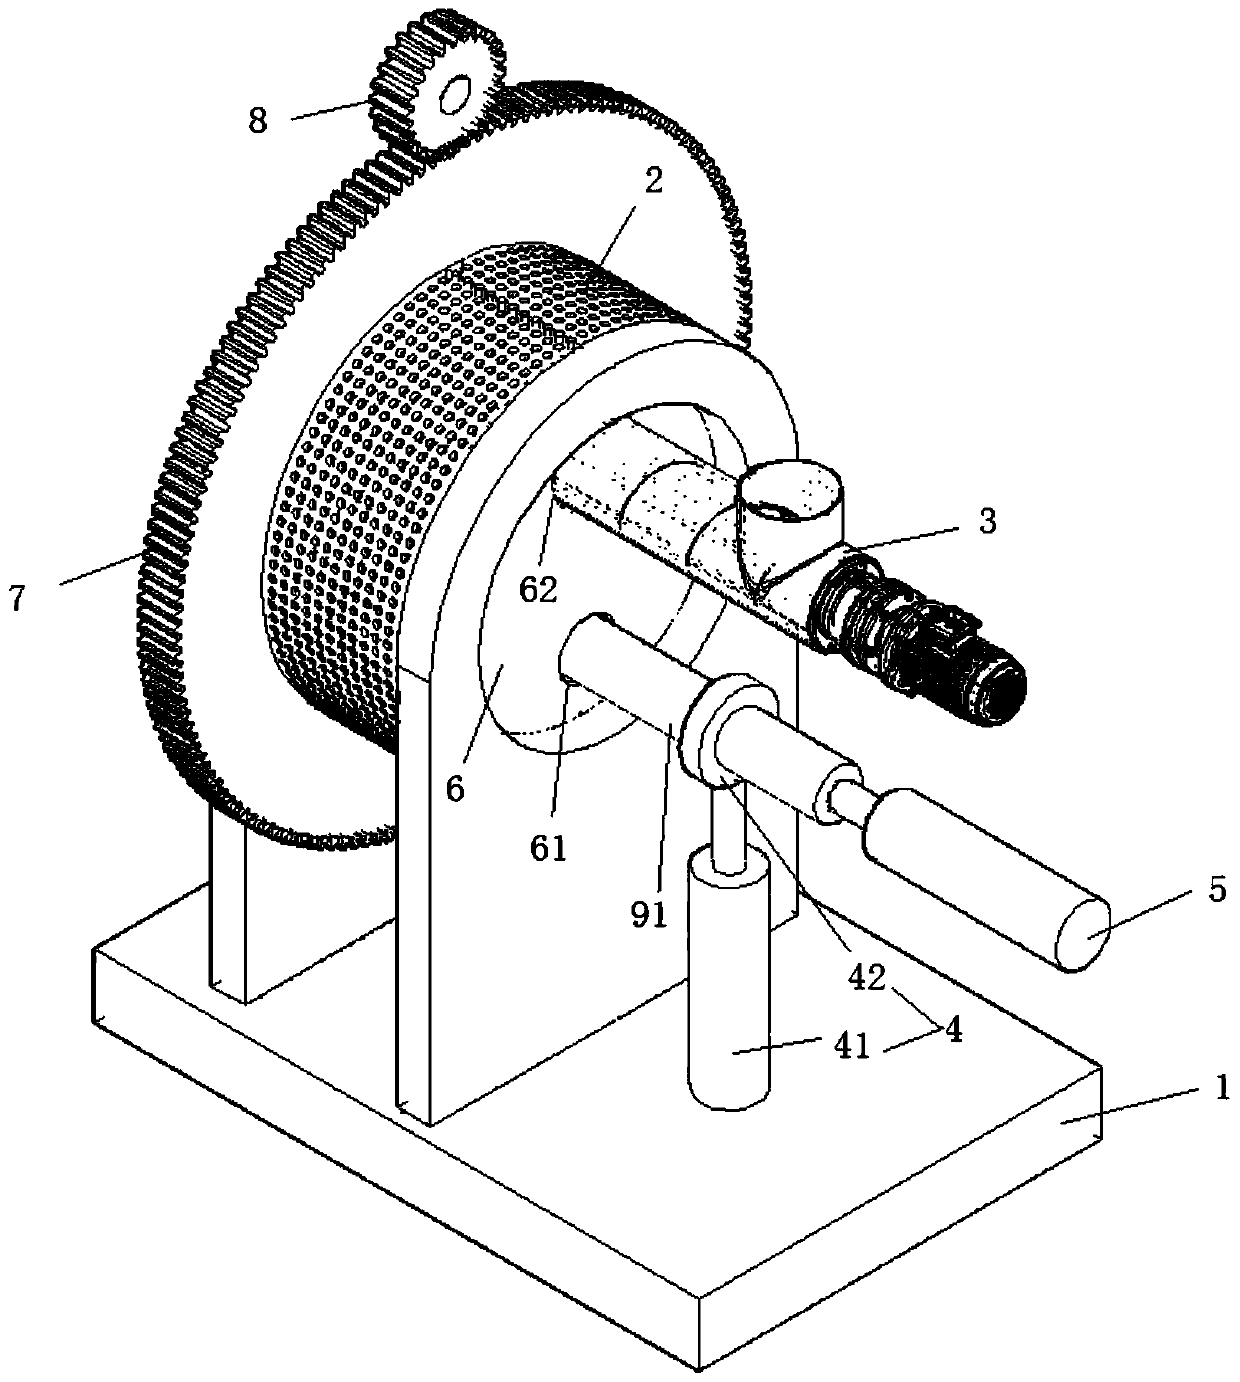 A pressure roller mobile granulator